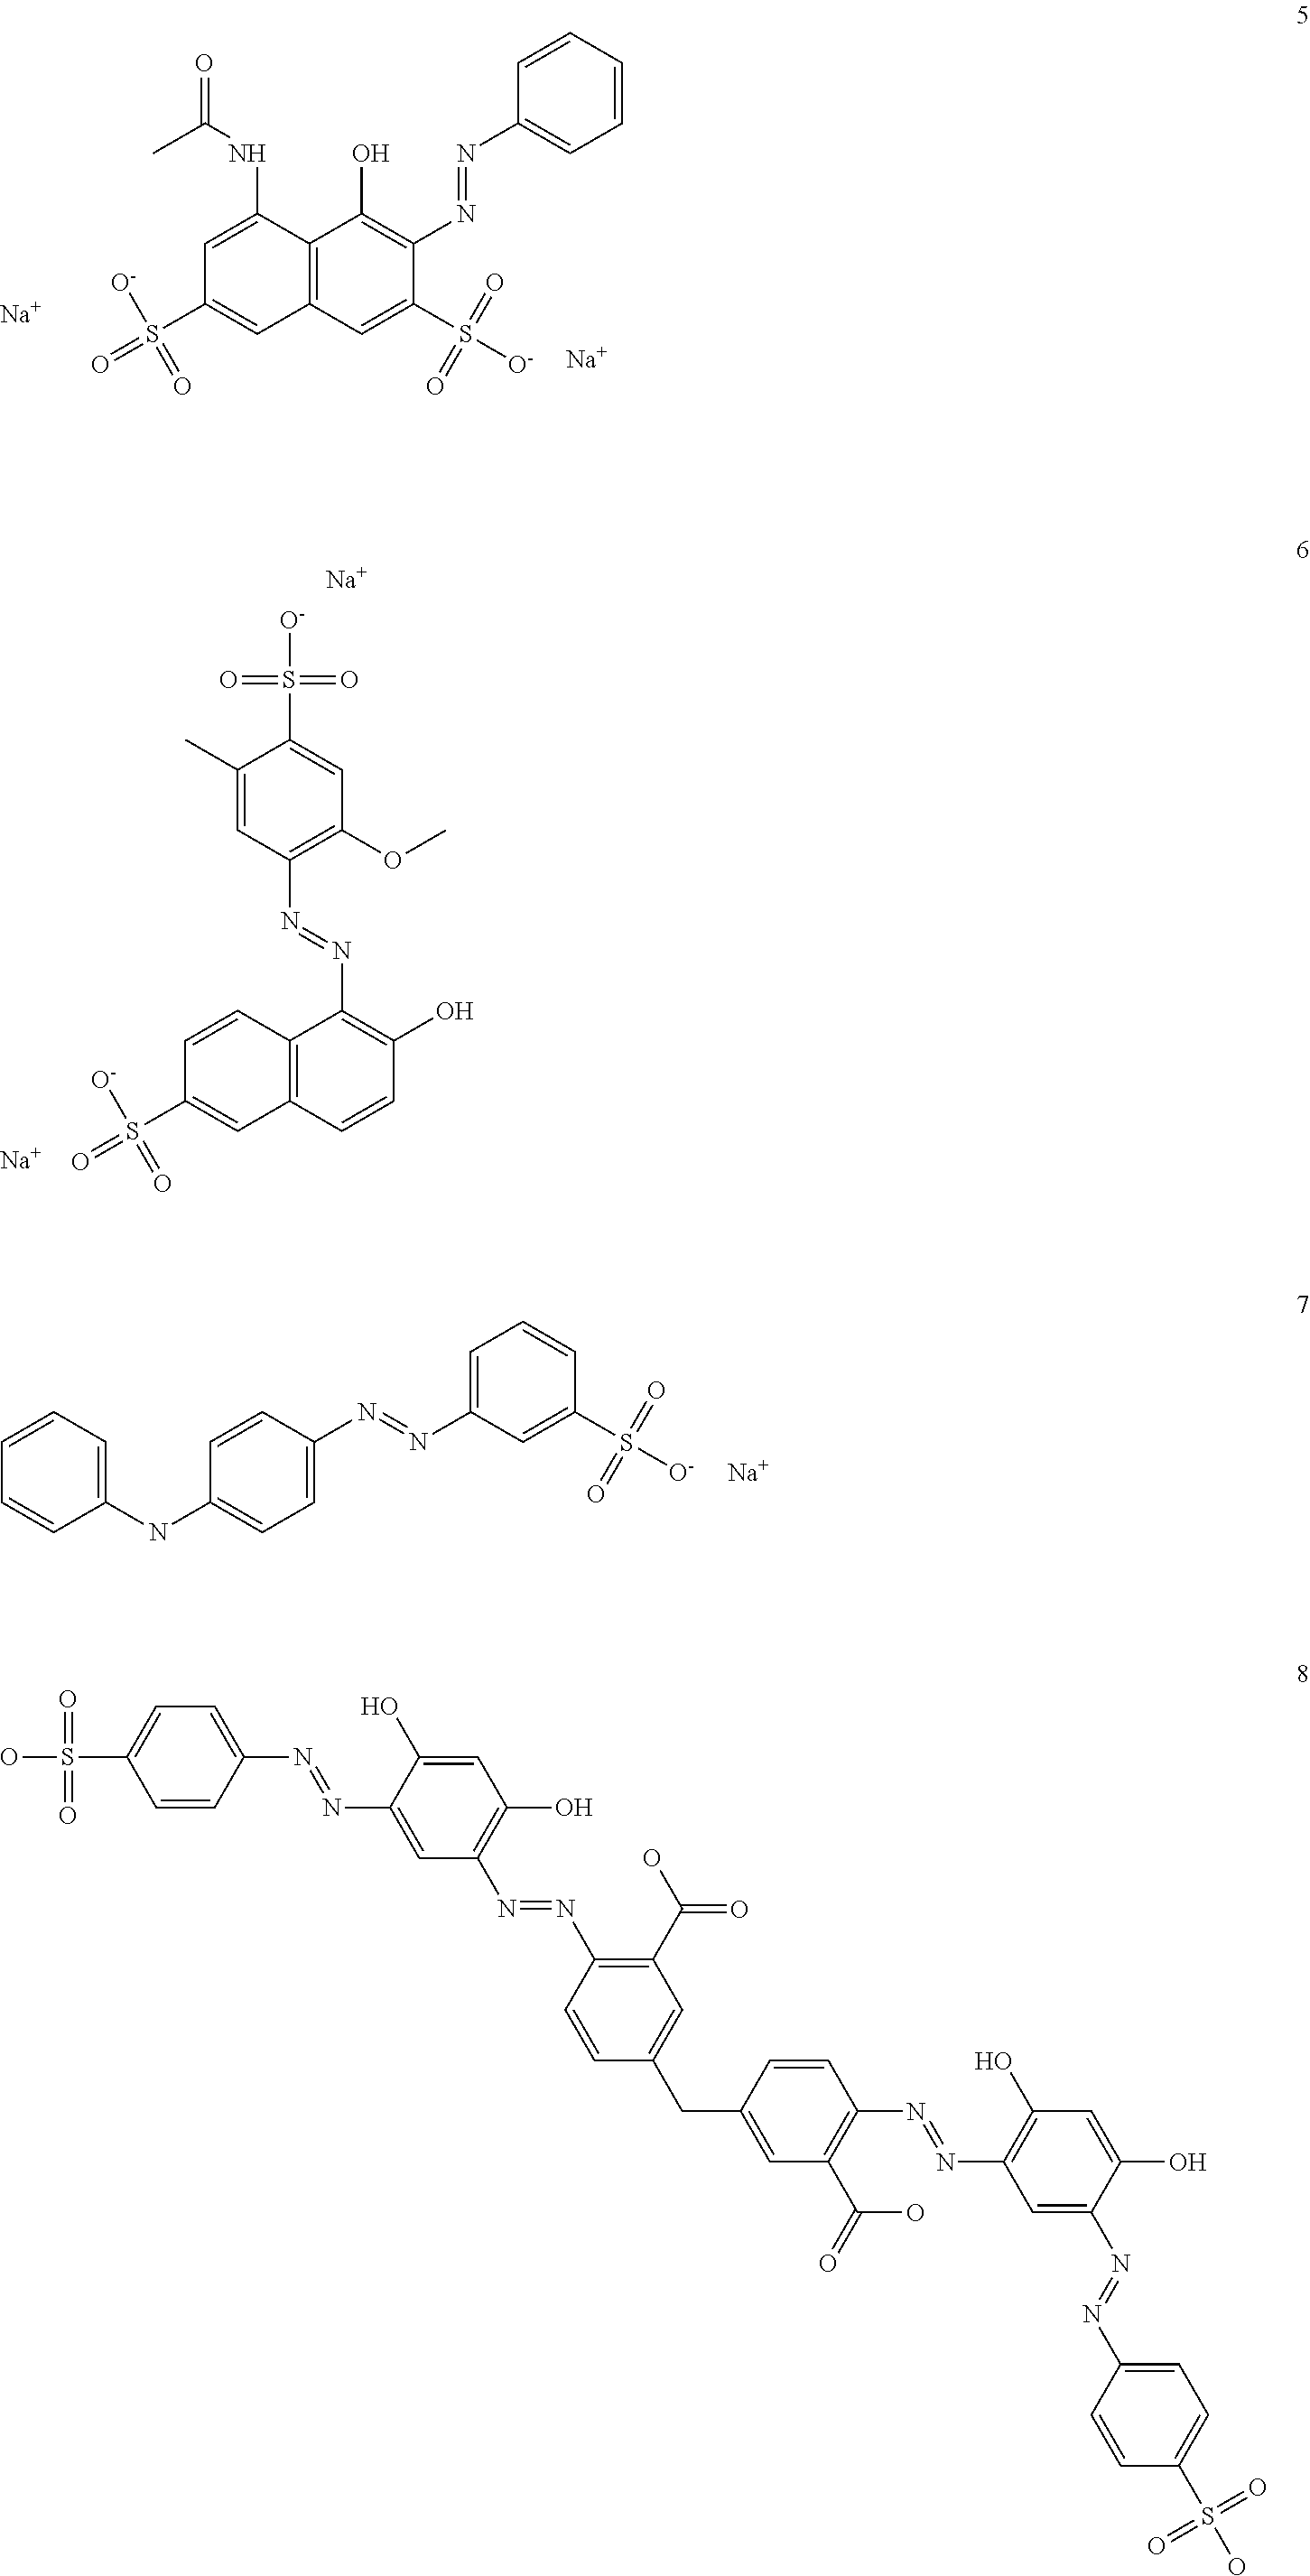 Use of water-dispersible carotenoid nanoparticles as taste modulators, taste modulators containing water-dispersible carotenoid nanoparticles, and, method for taste modulation